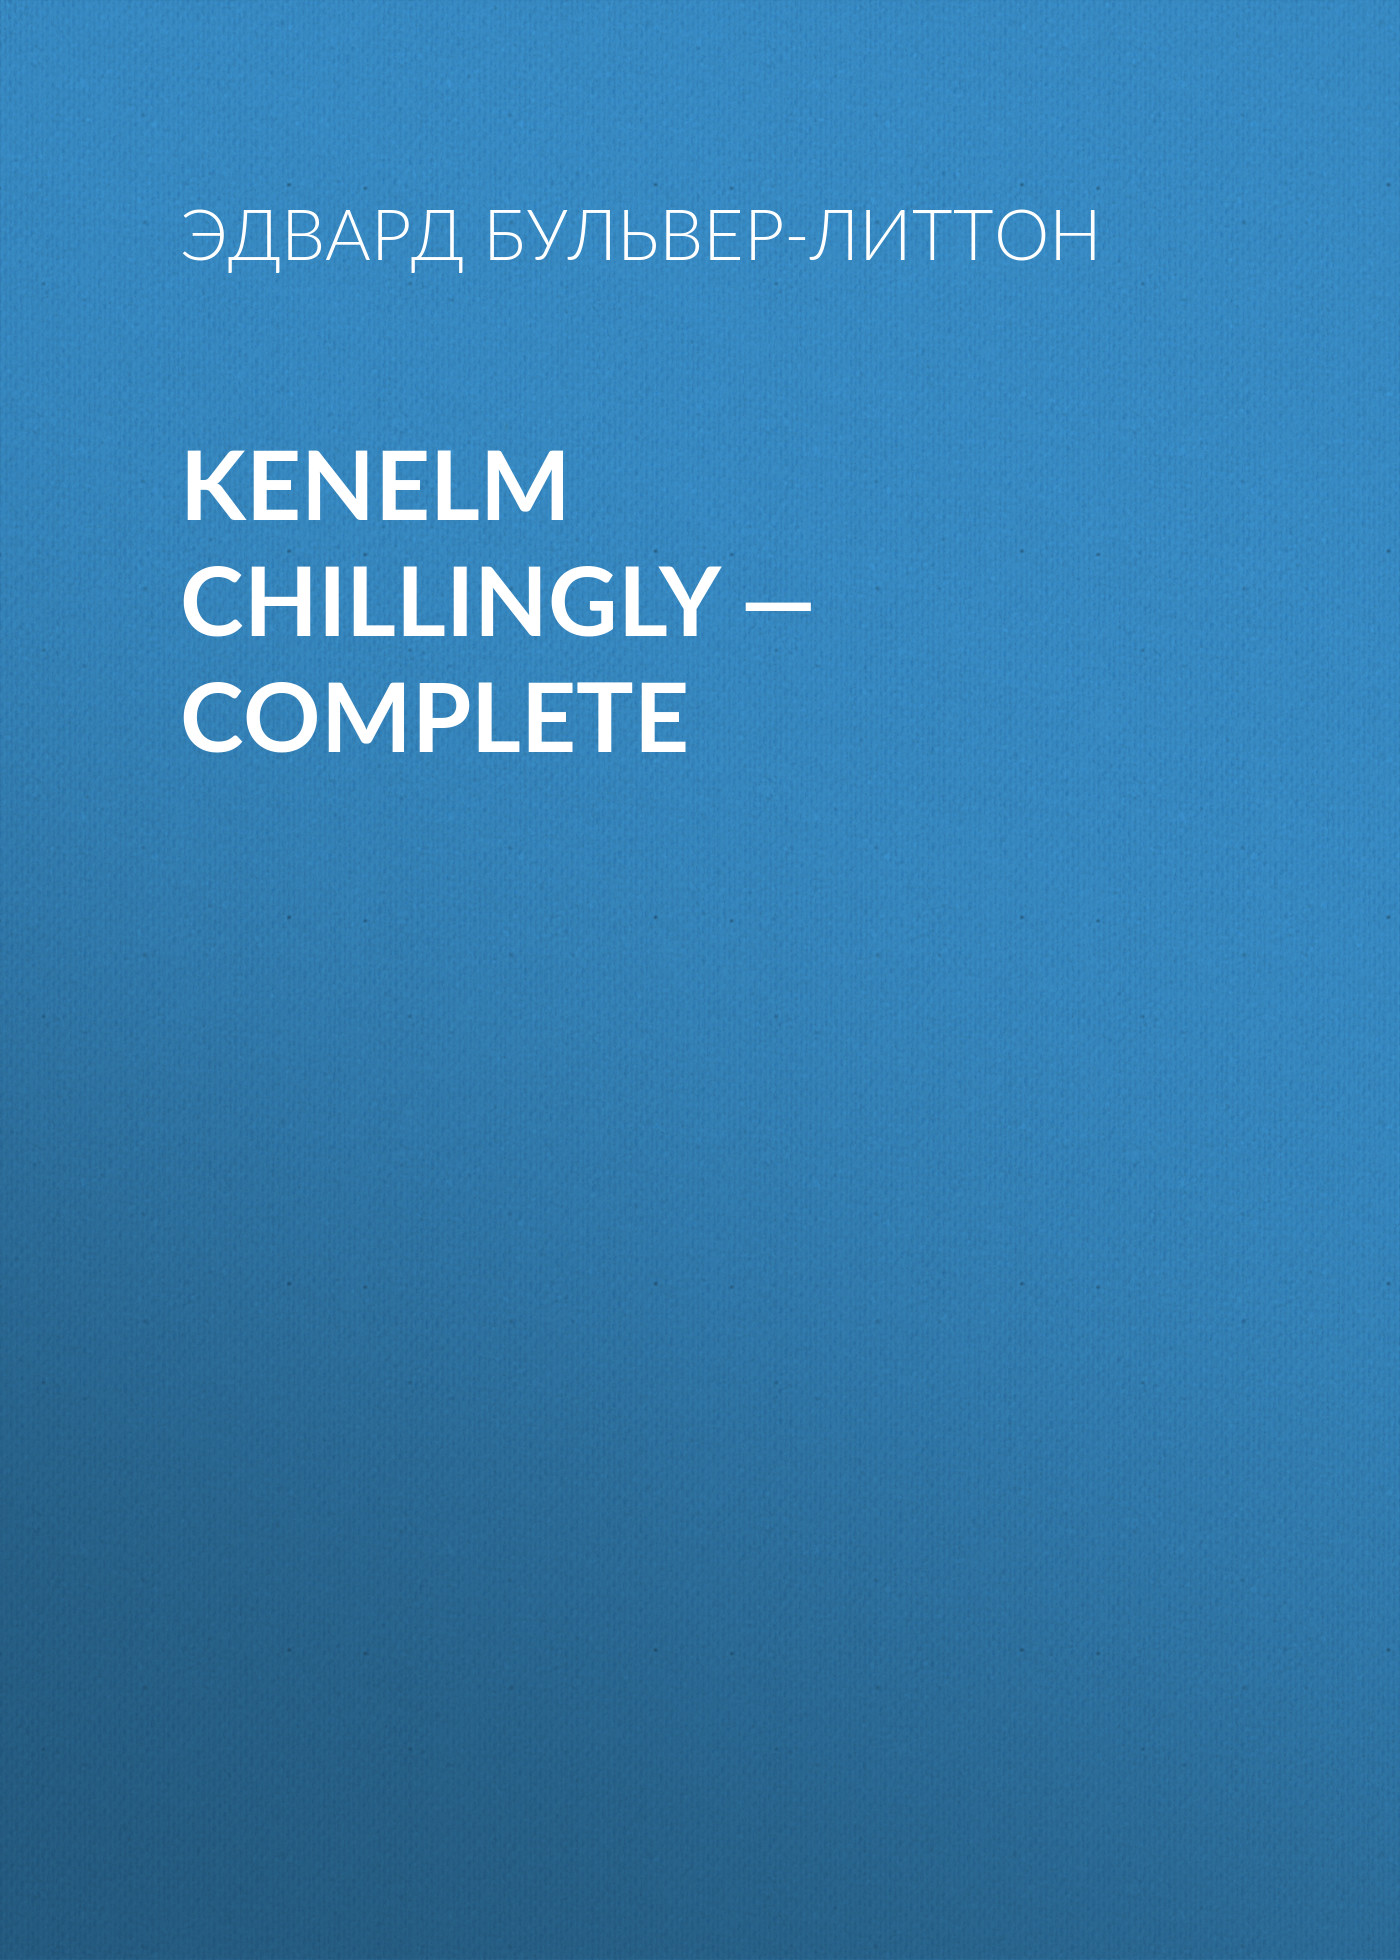 Kenelm Chillingly— Complete